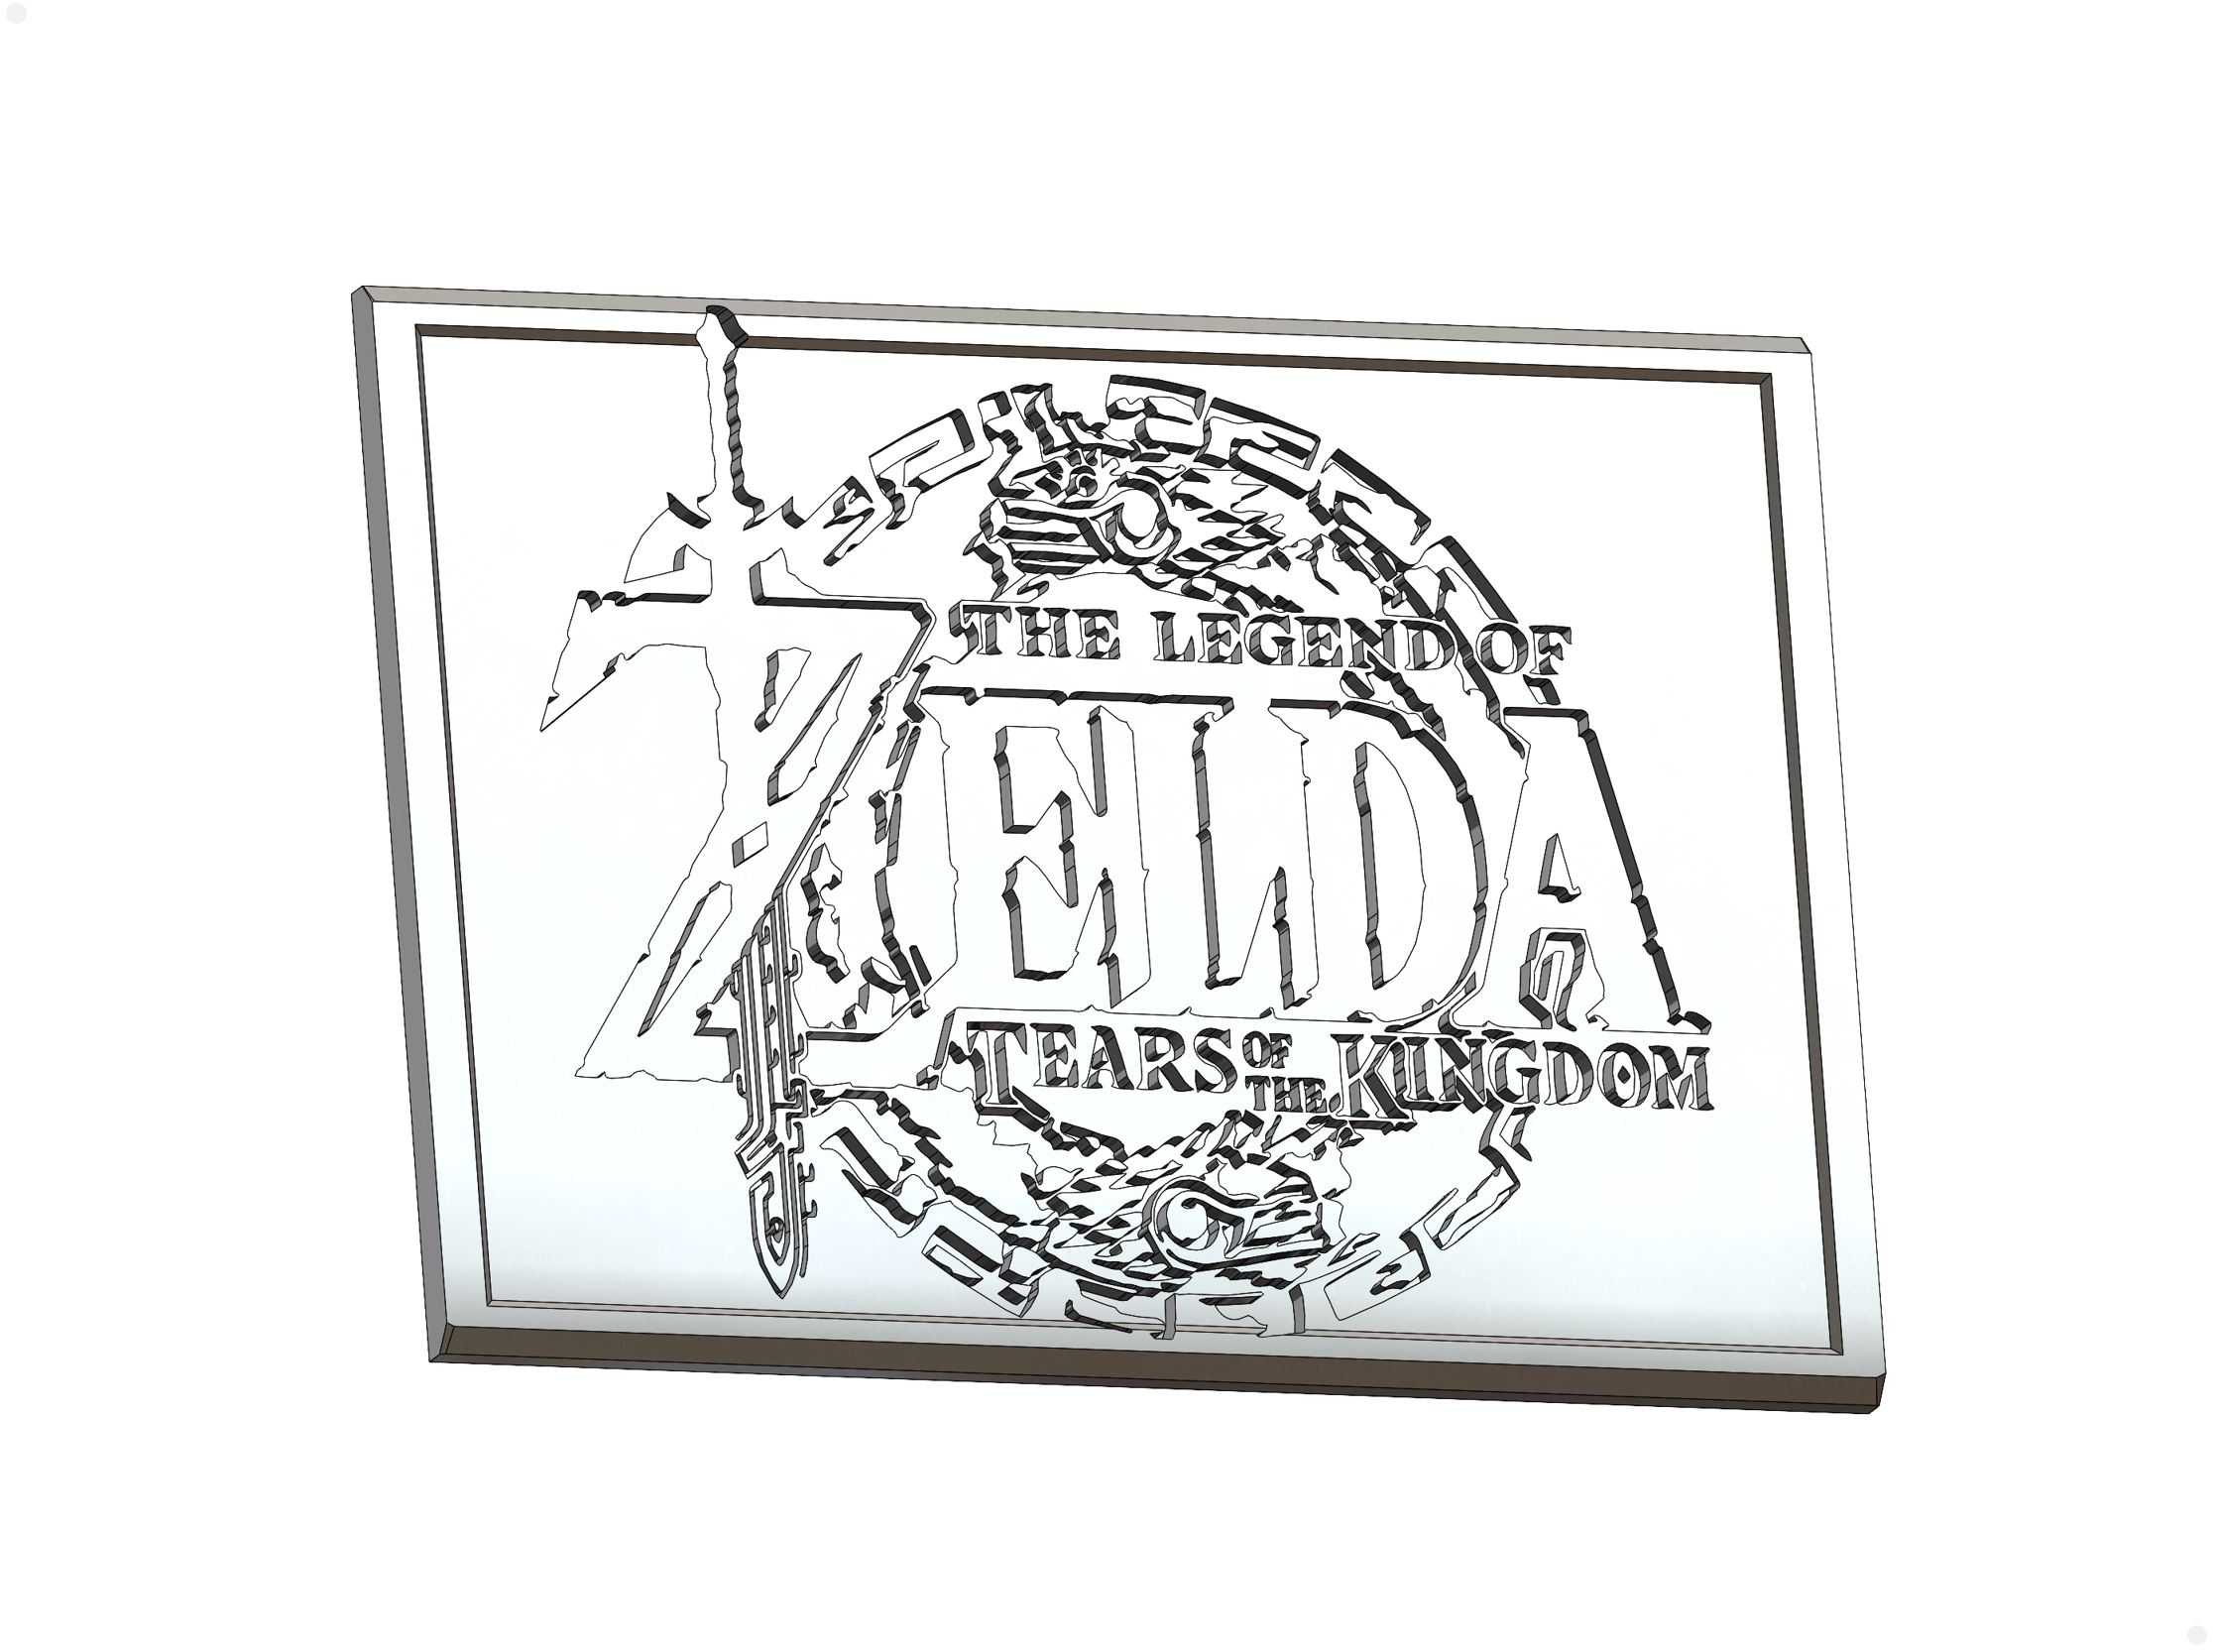 Zelda Switch dock : r/3Dprinting